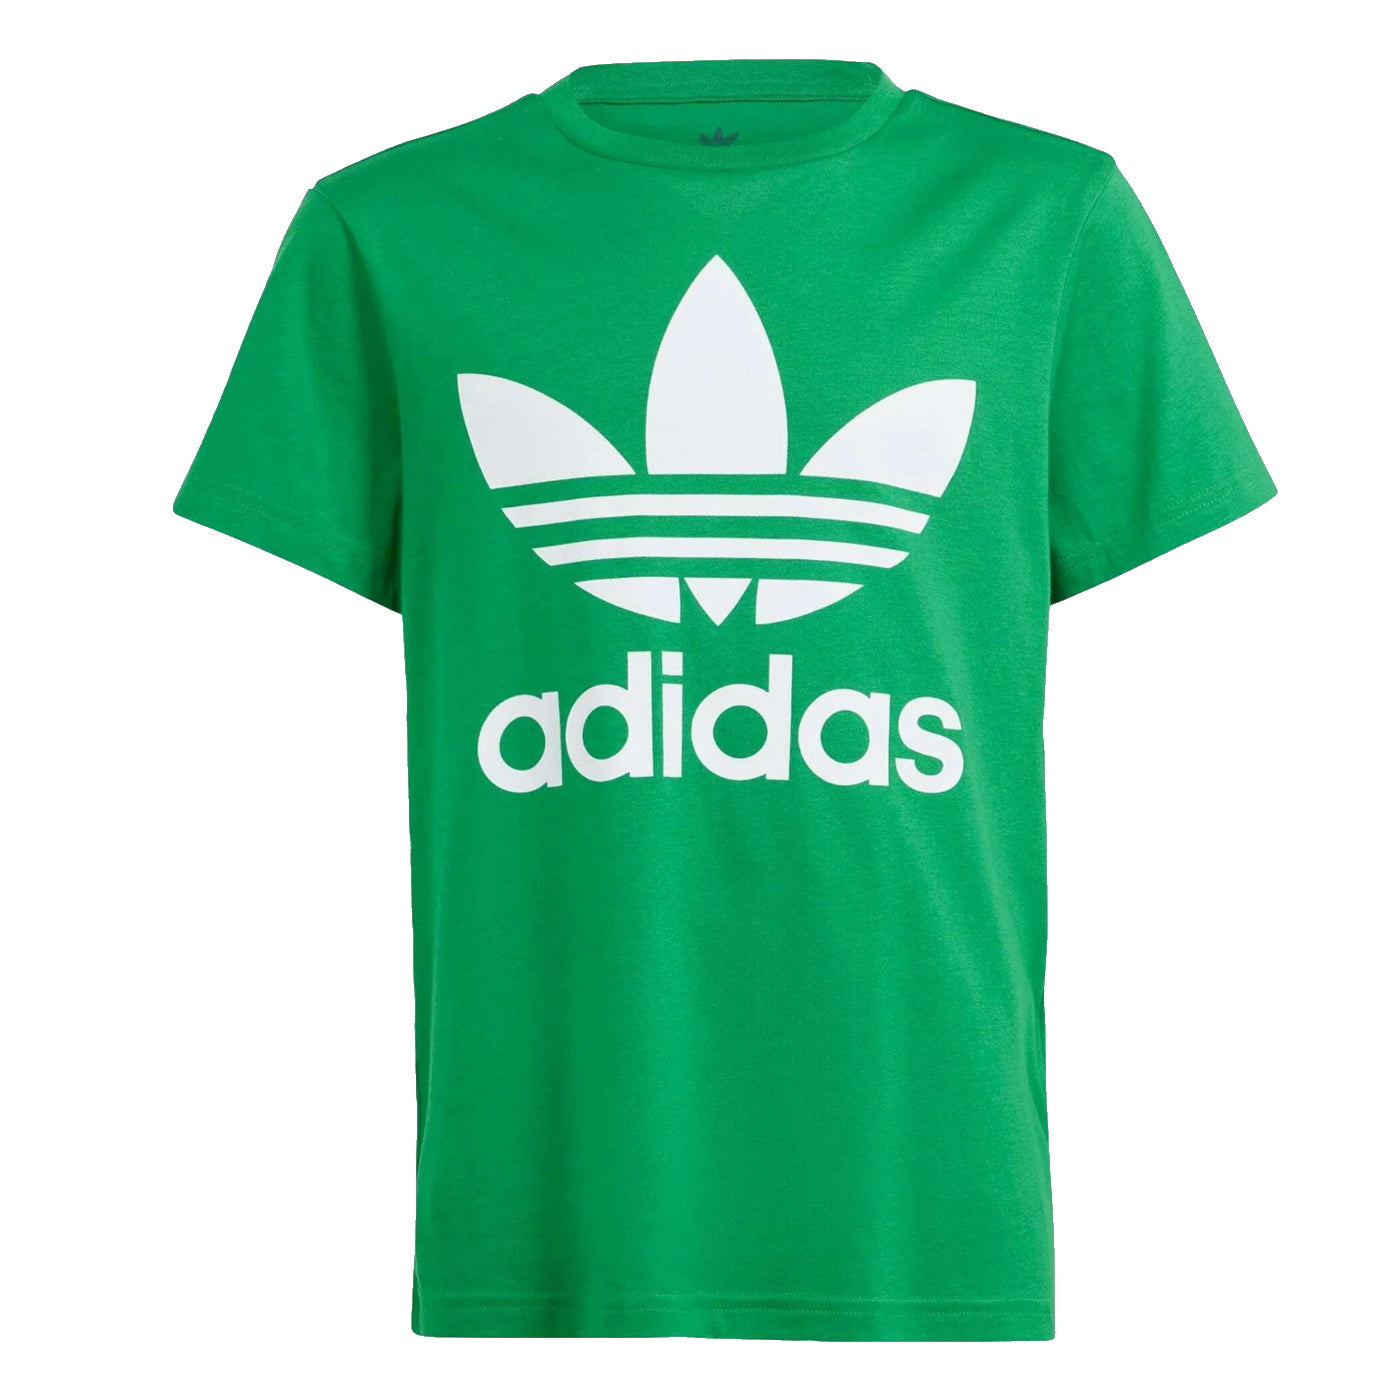 Adidas t-shirt bambino unisex